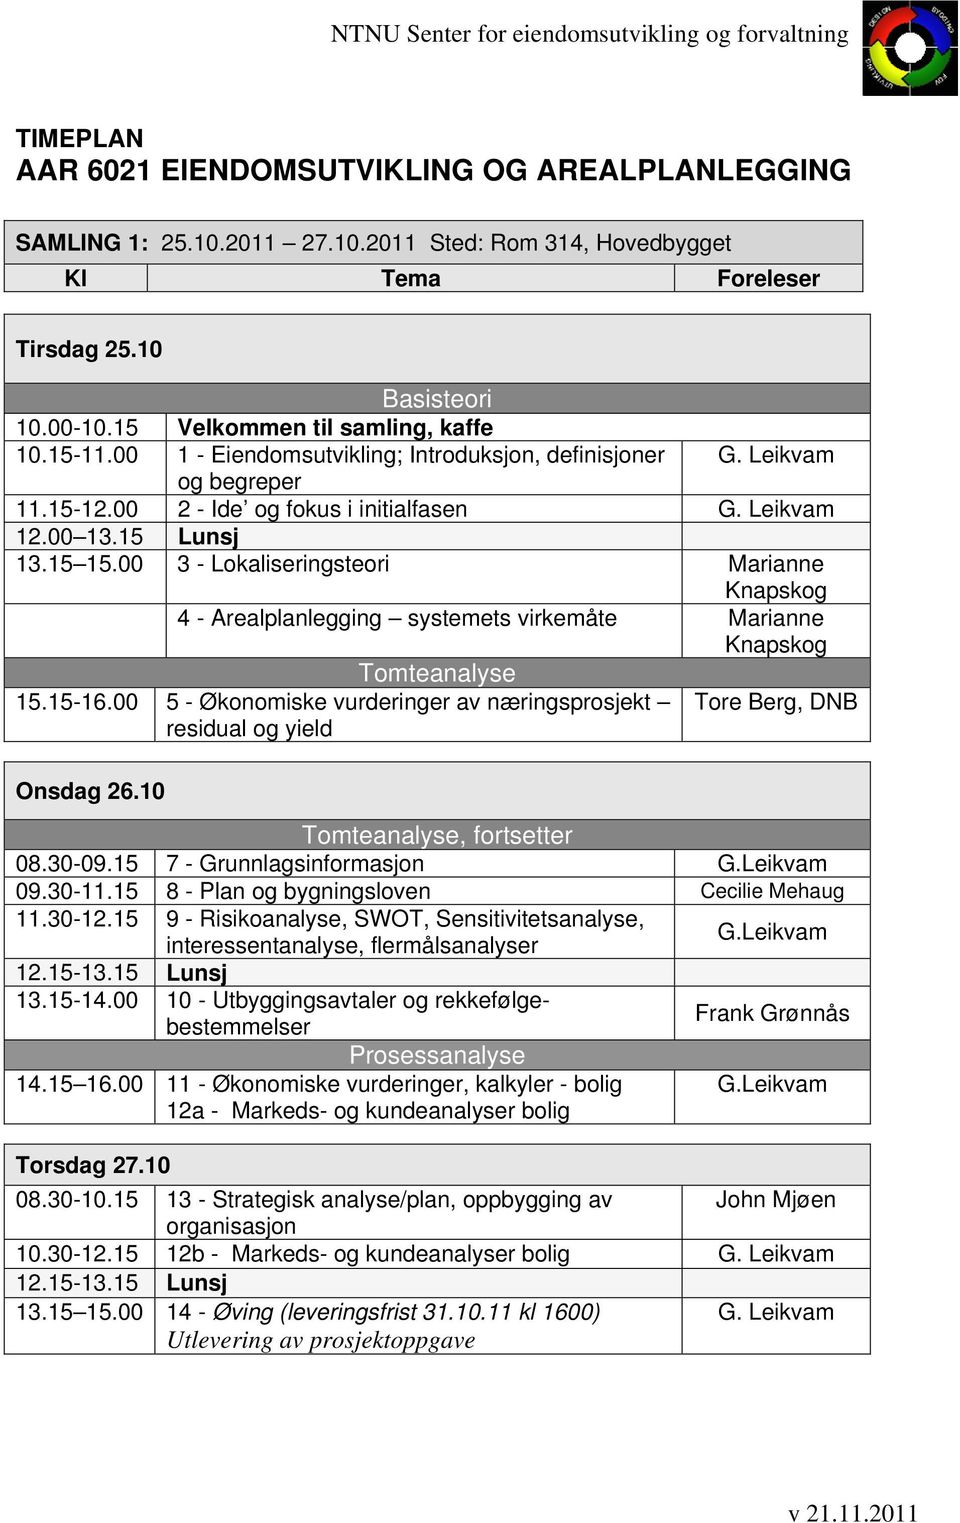 00 3 - Lokaliseringsteori Marianne Knapskog 4 - Arealplanlegging systemets virkemåte Marianne Knapskog Tomteanalyse 15.15-16.